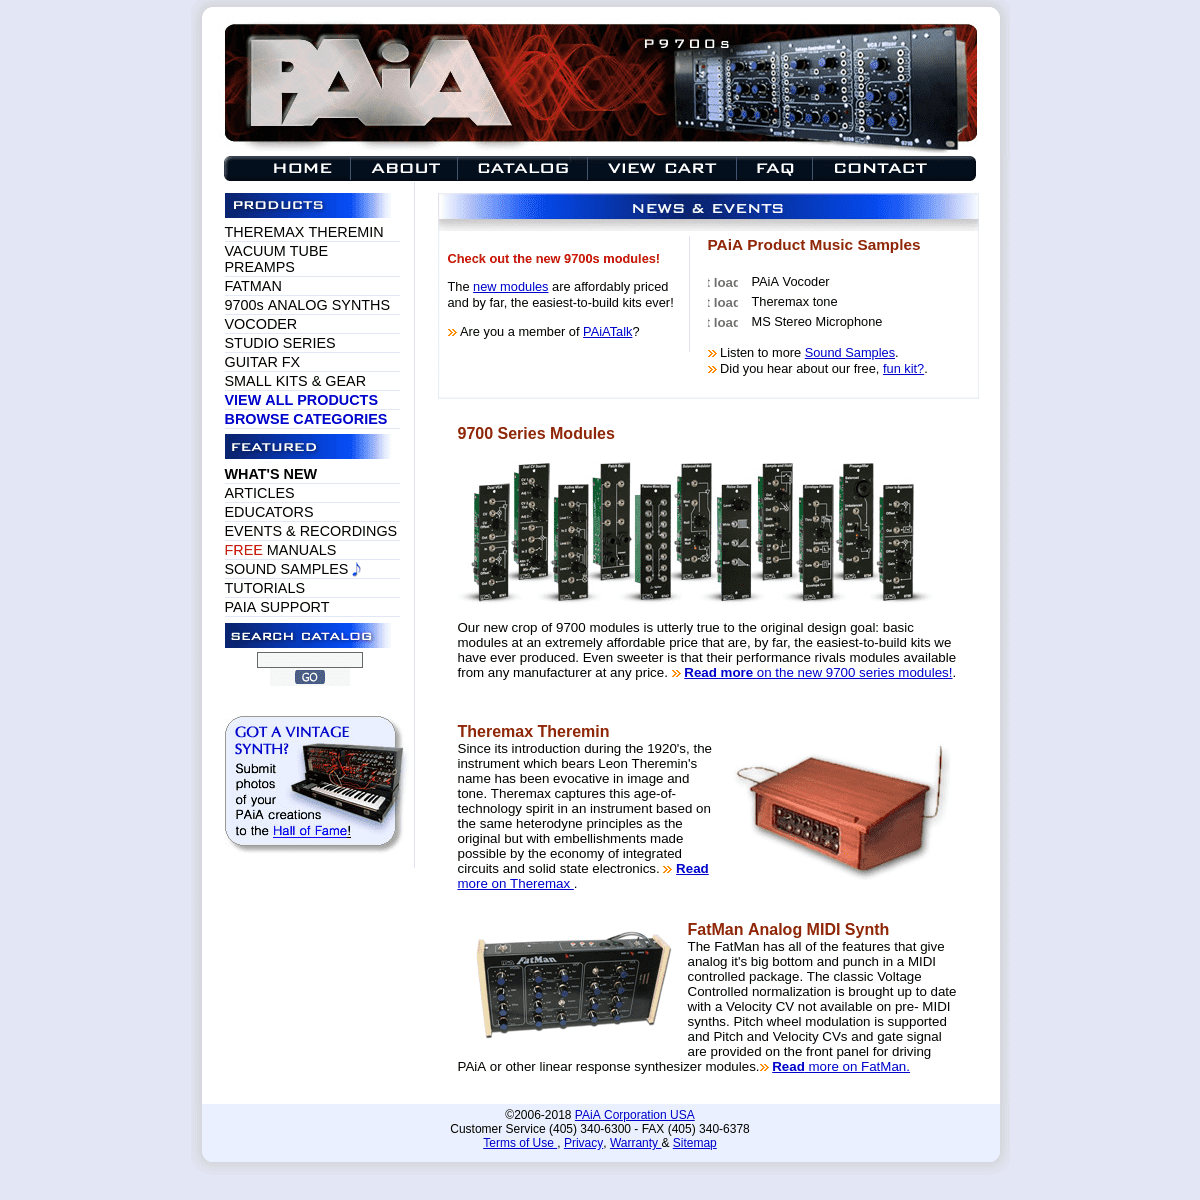 A complete backup of paia.com